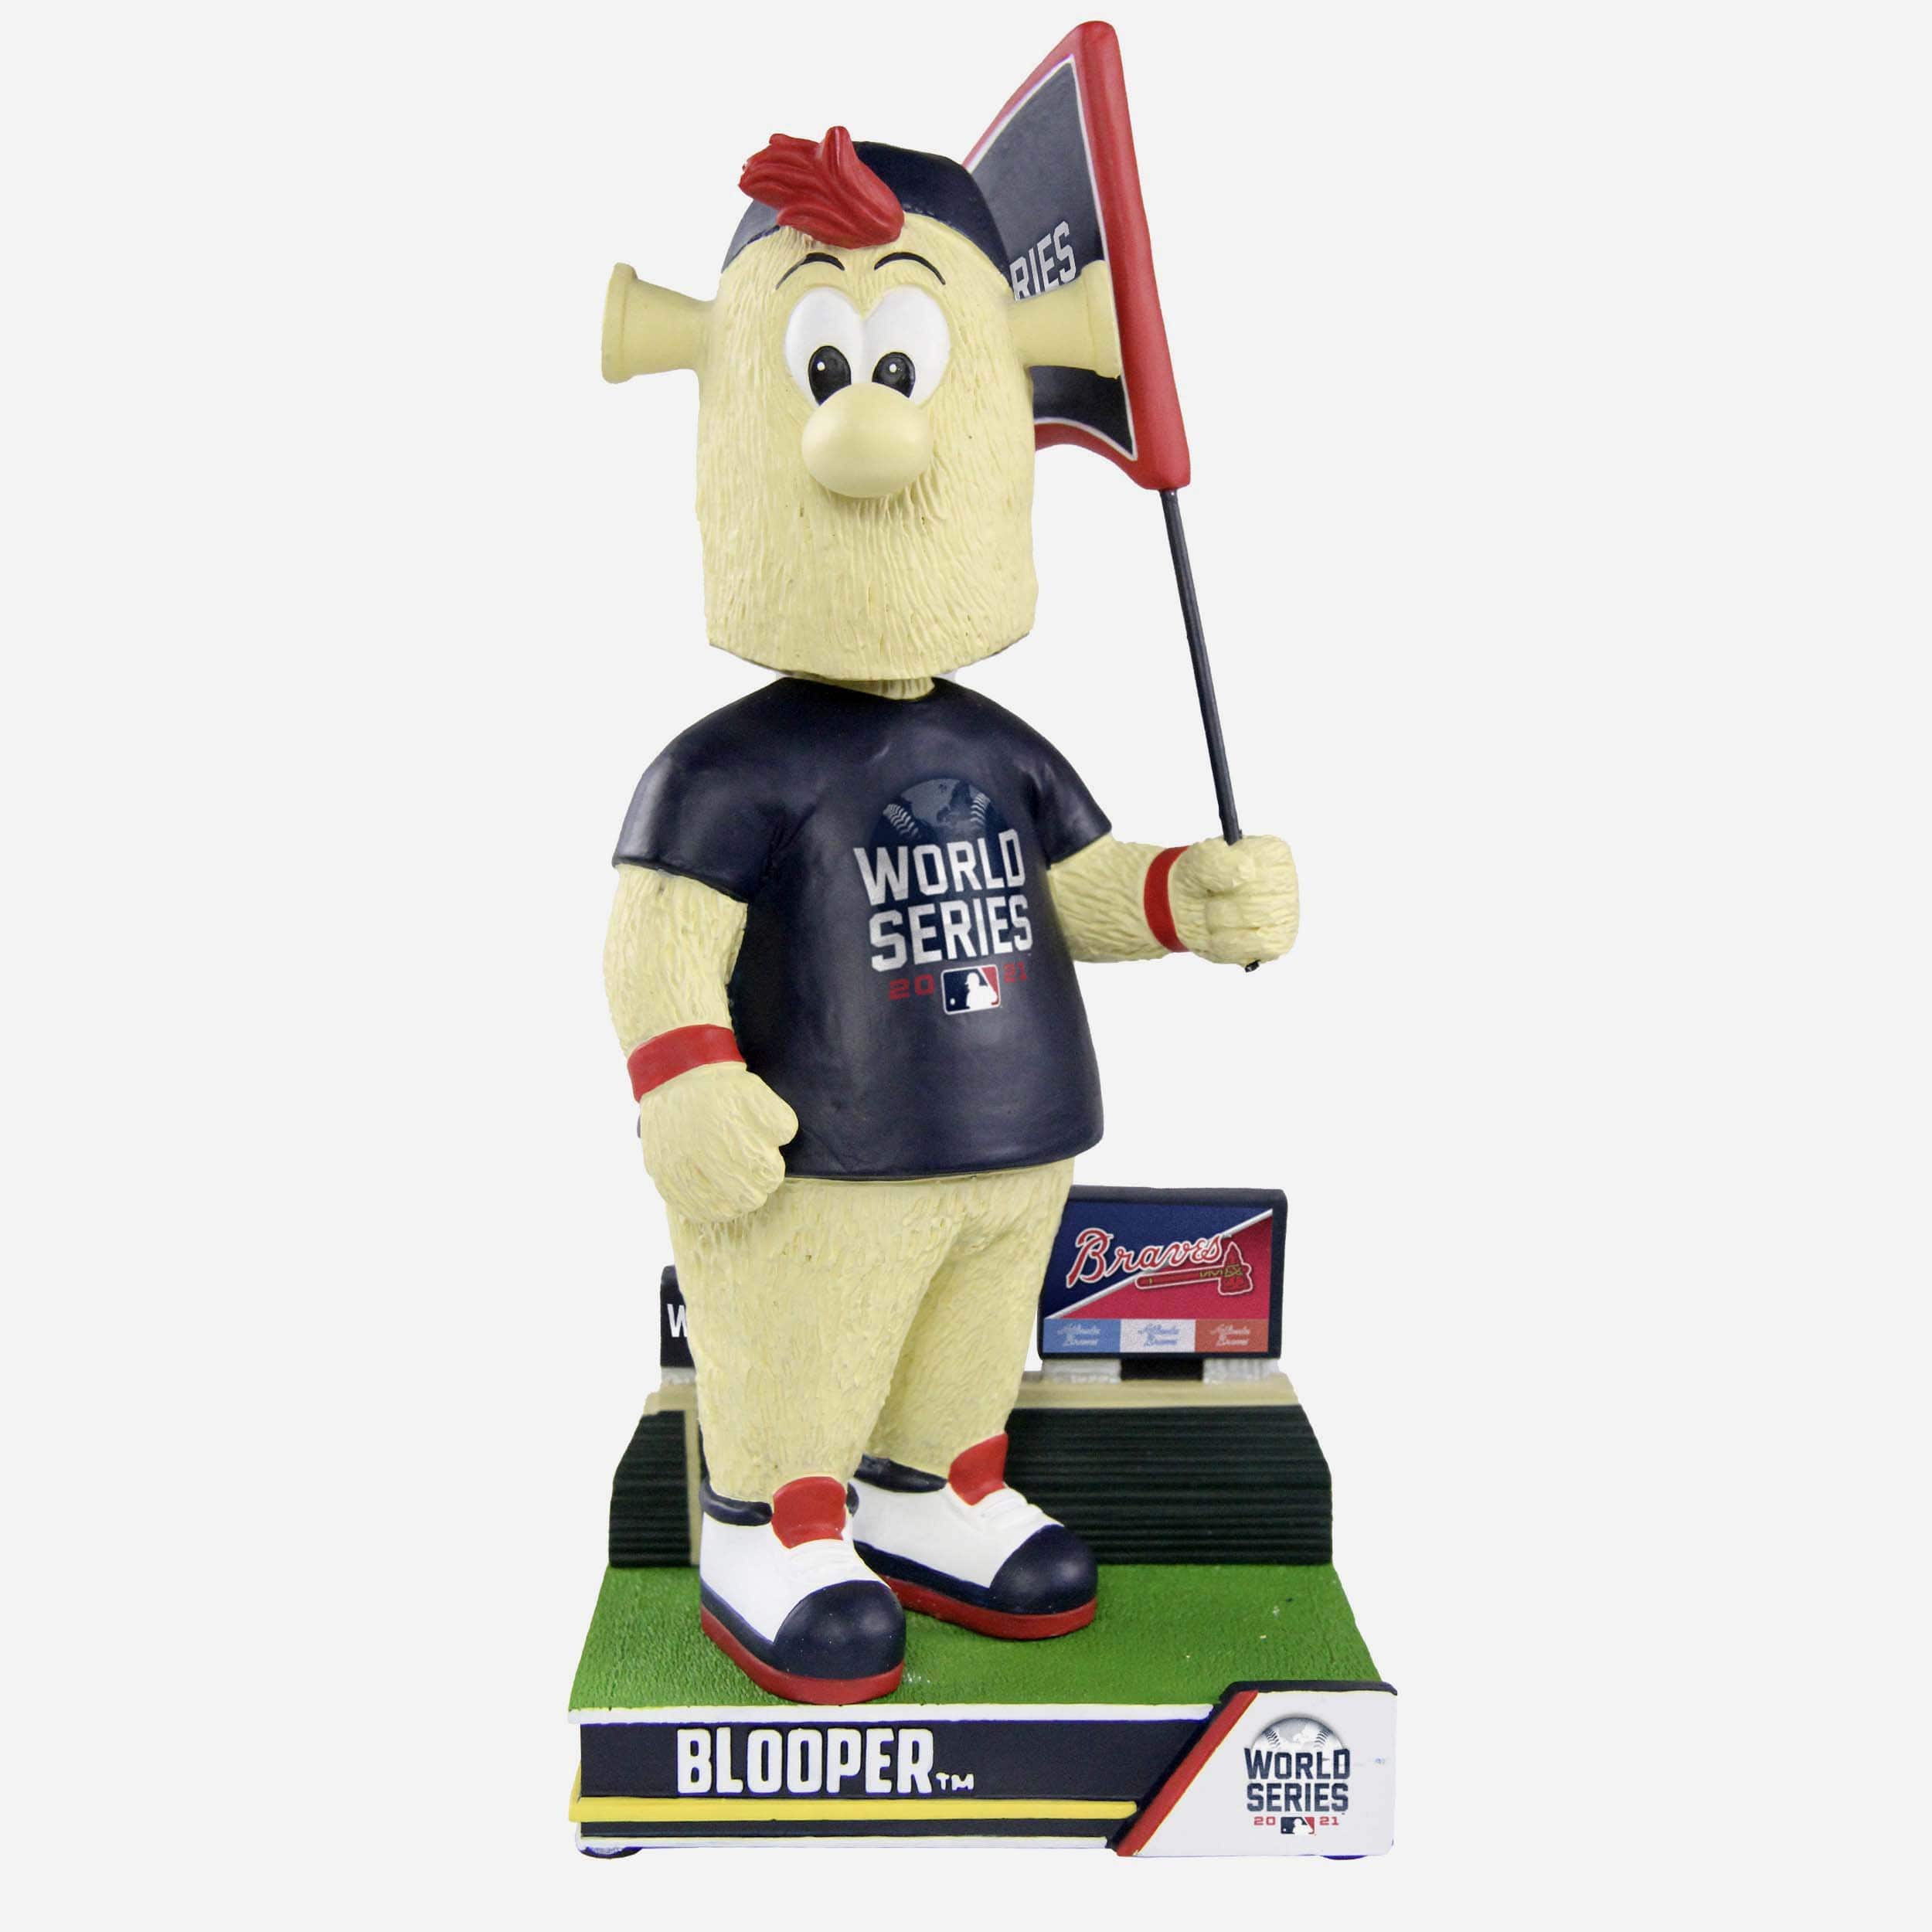 Atlanta Braves: Blooper 2021 Mascot - Officially Licensed MLB